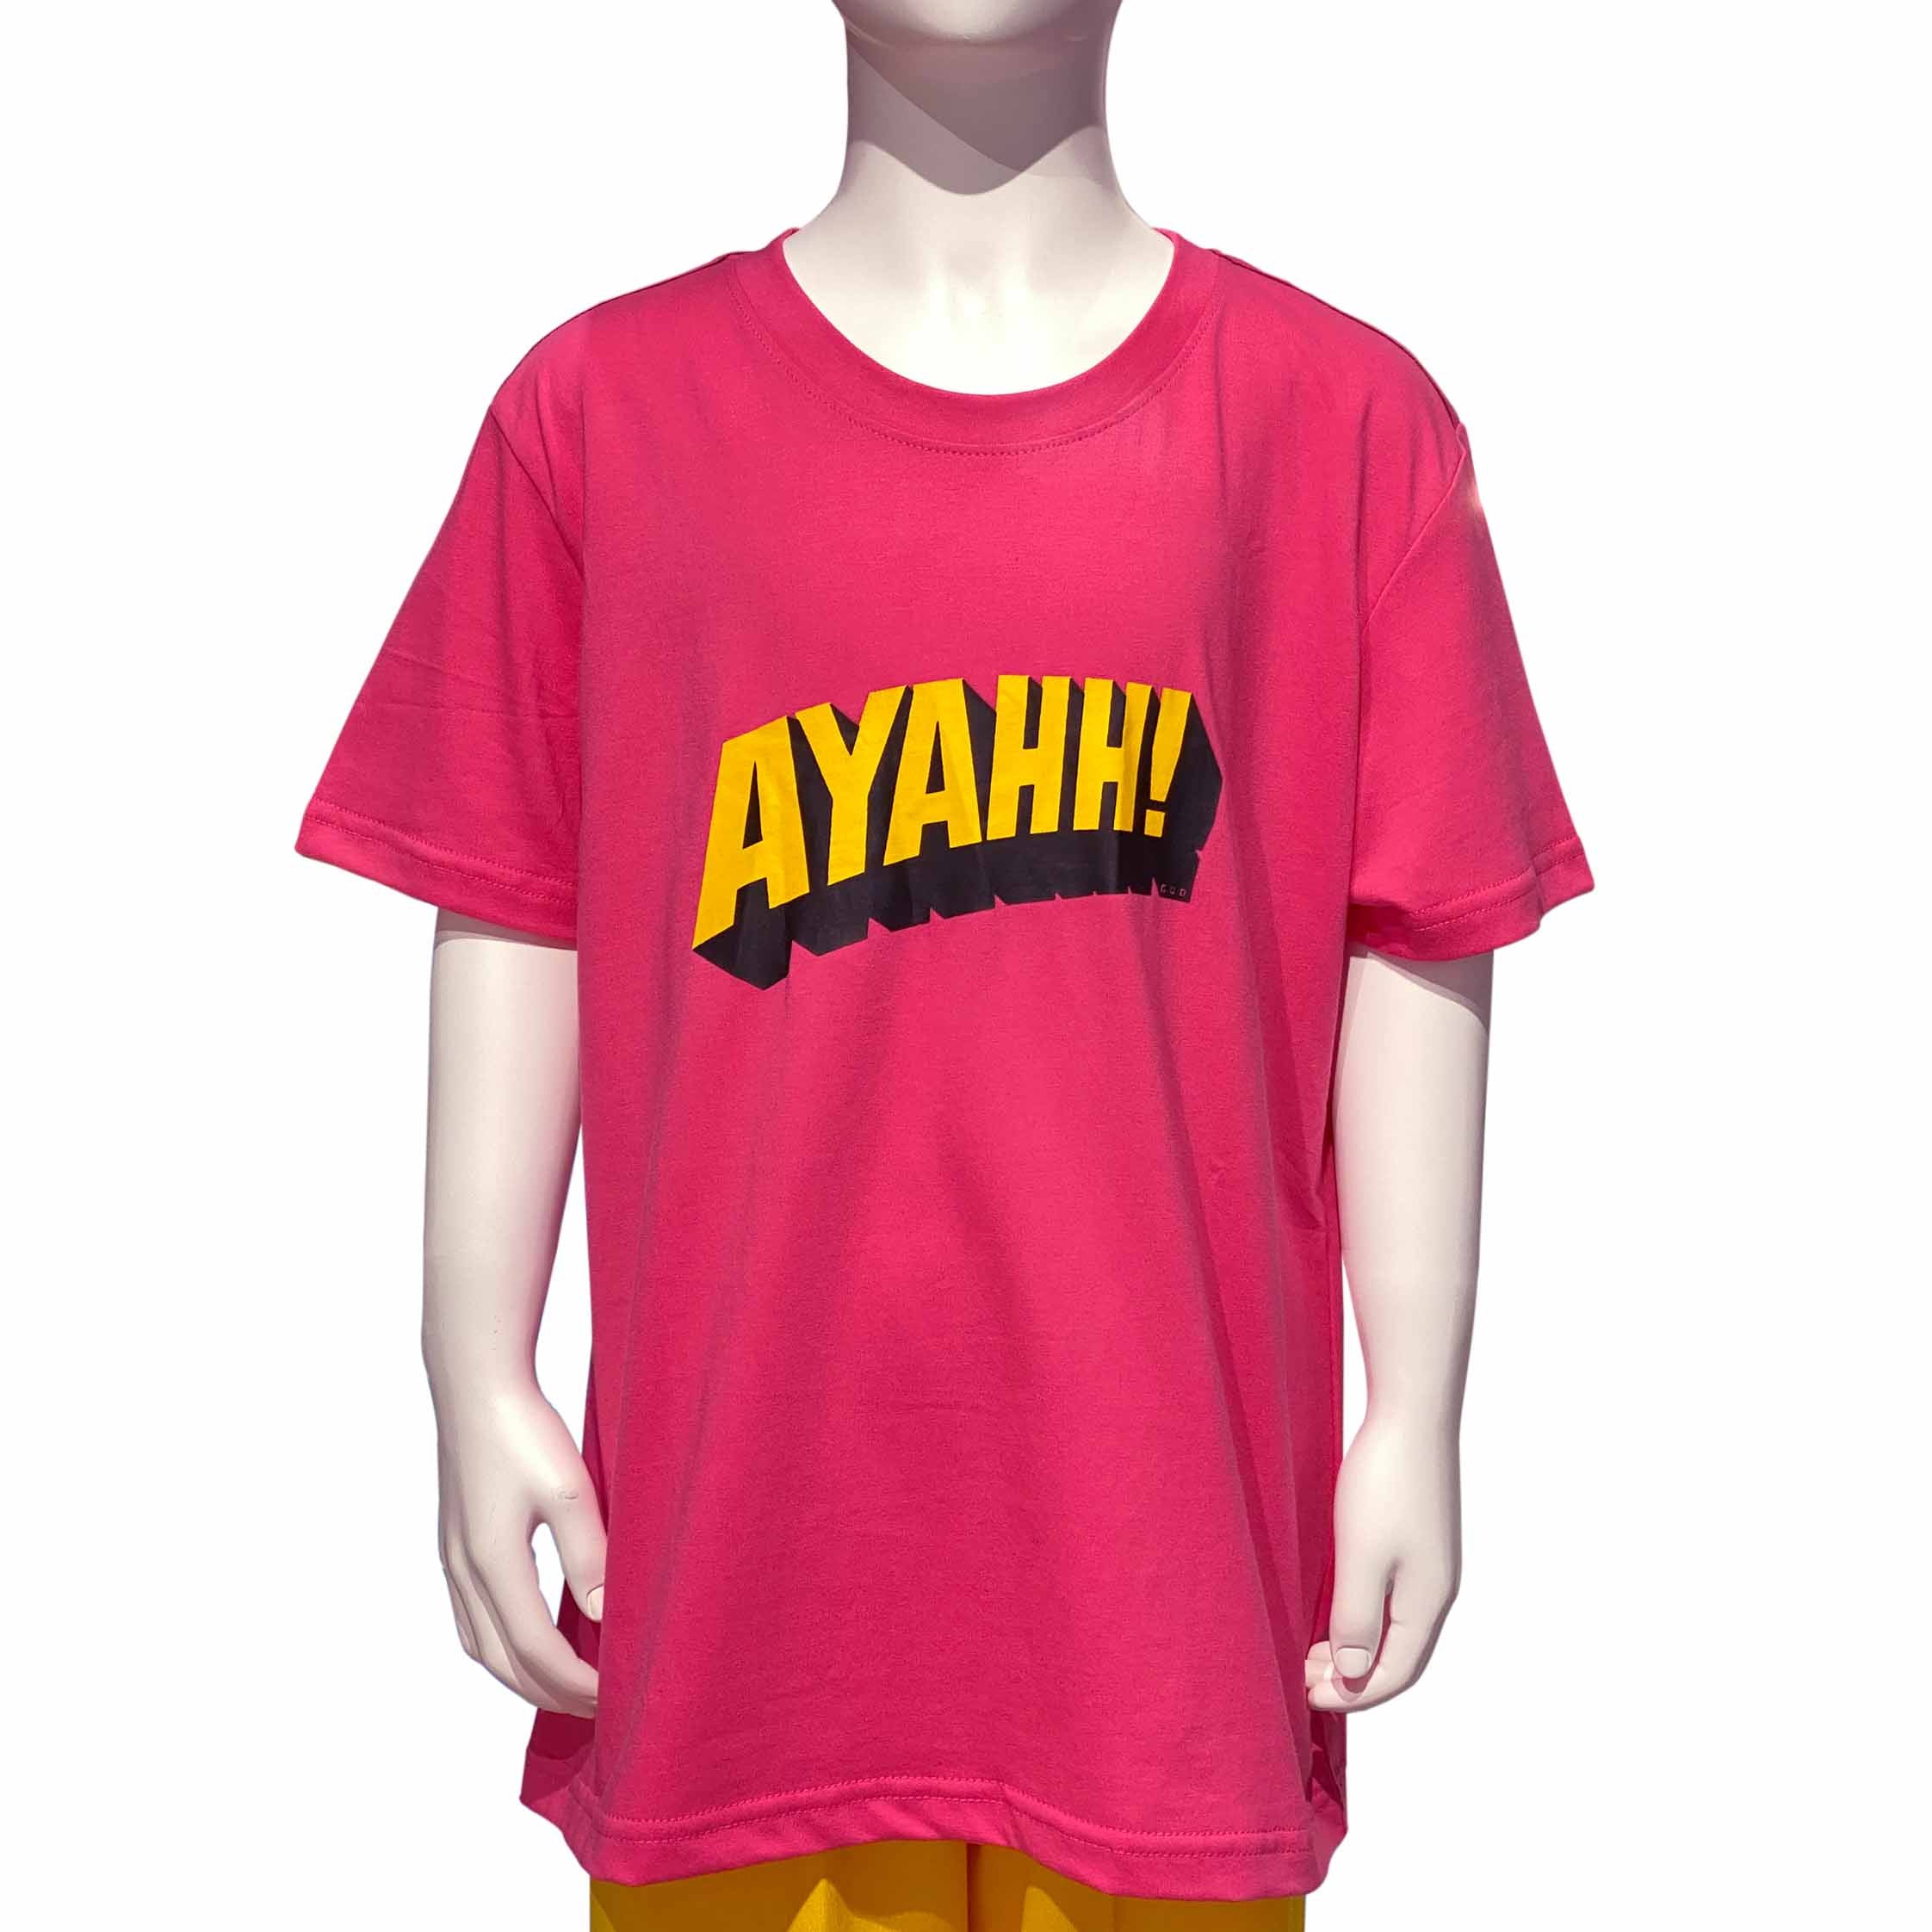 'AYAHH' Kids T-shirt, Coral